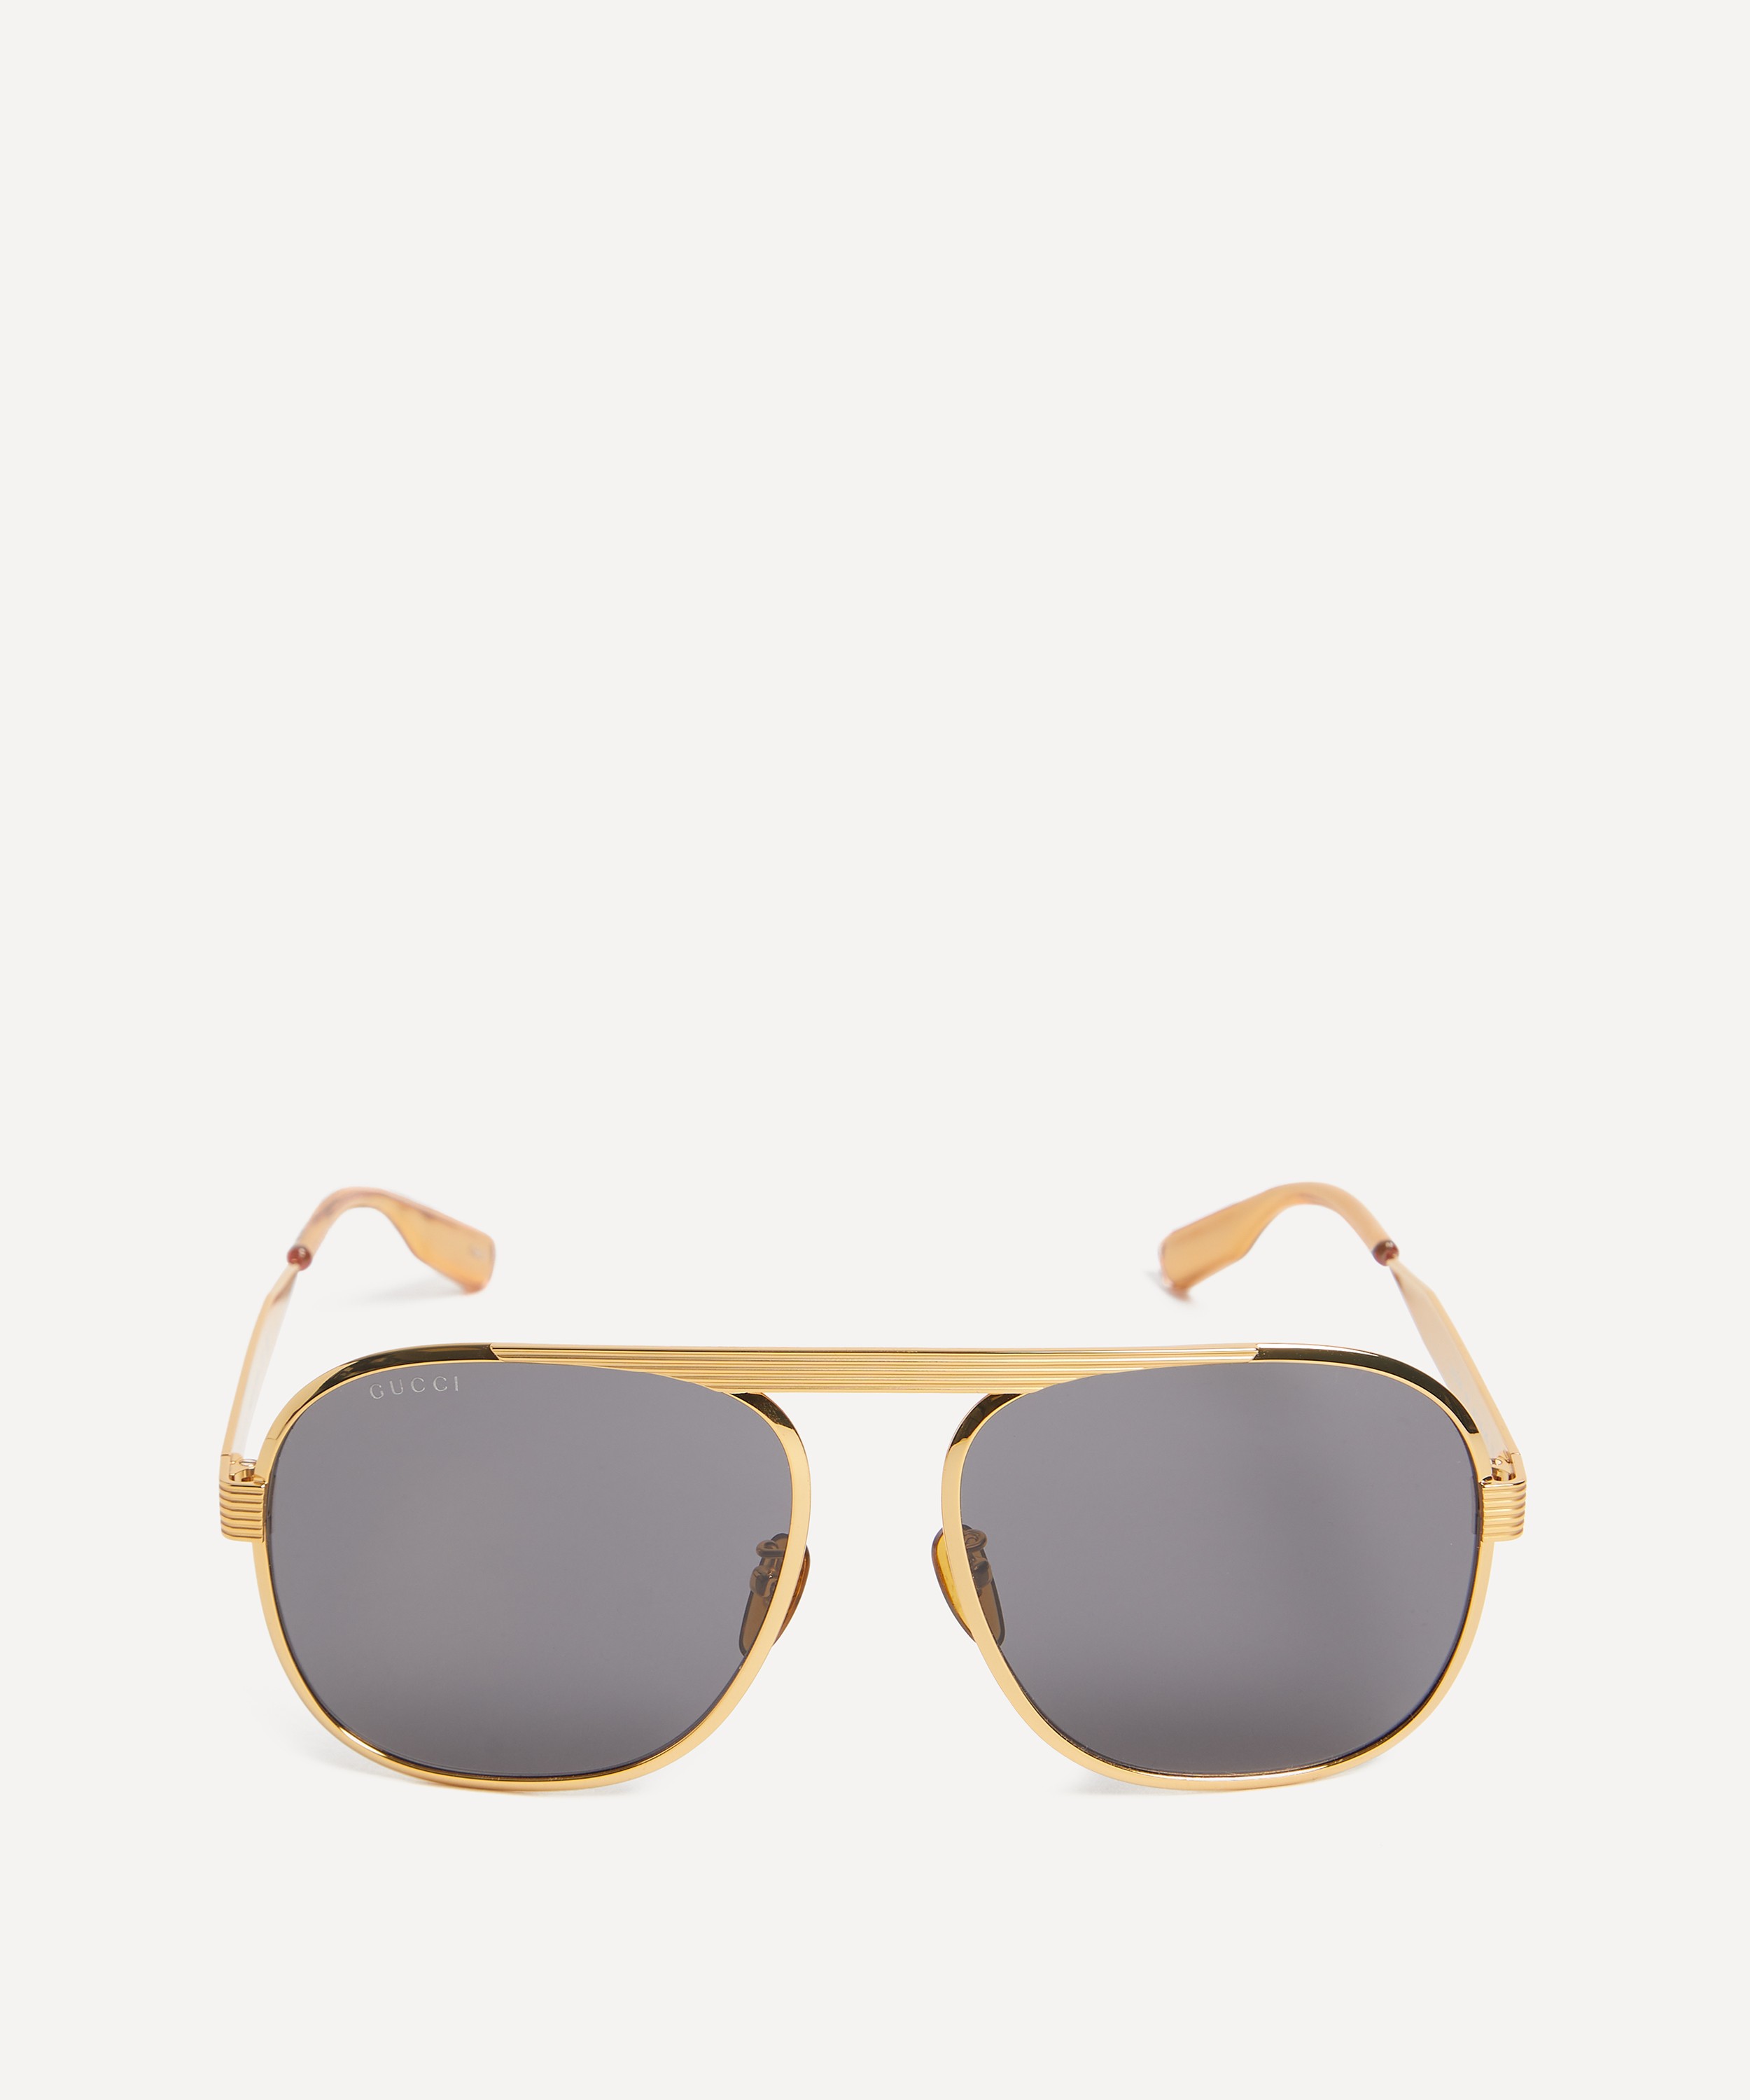 Gucci - Aviator Sunglasses